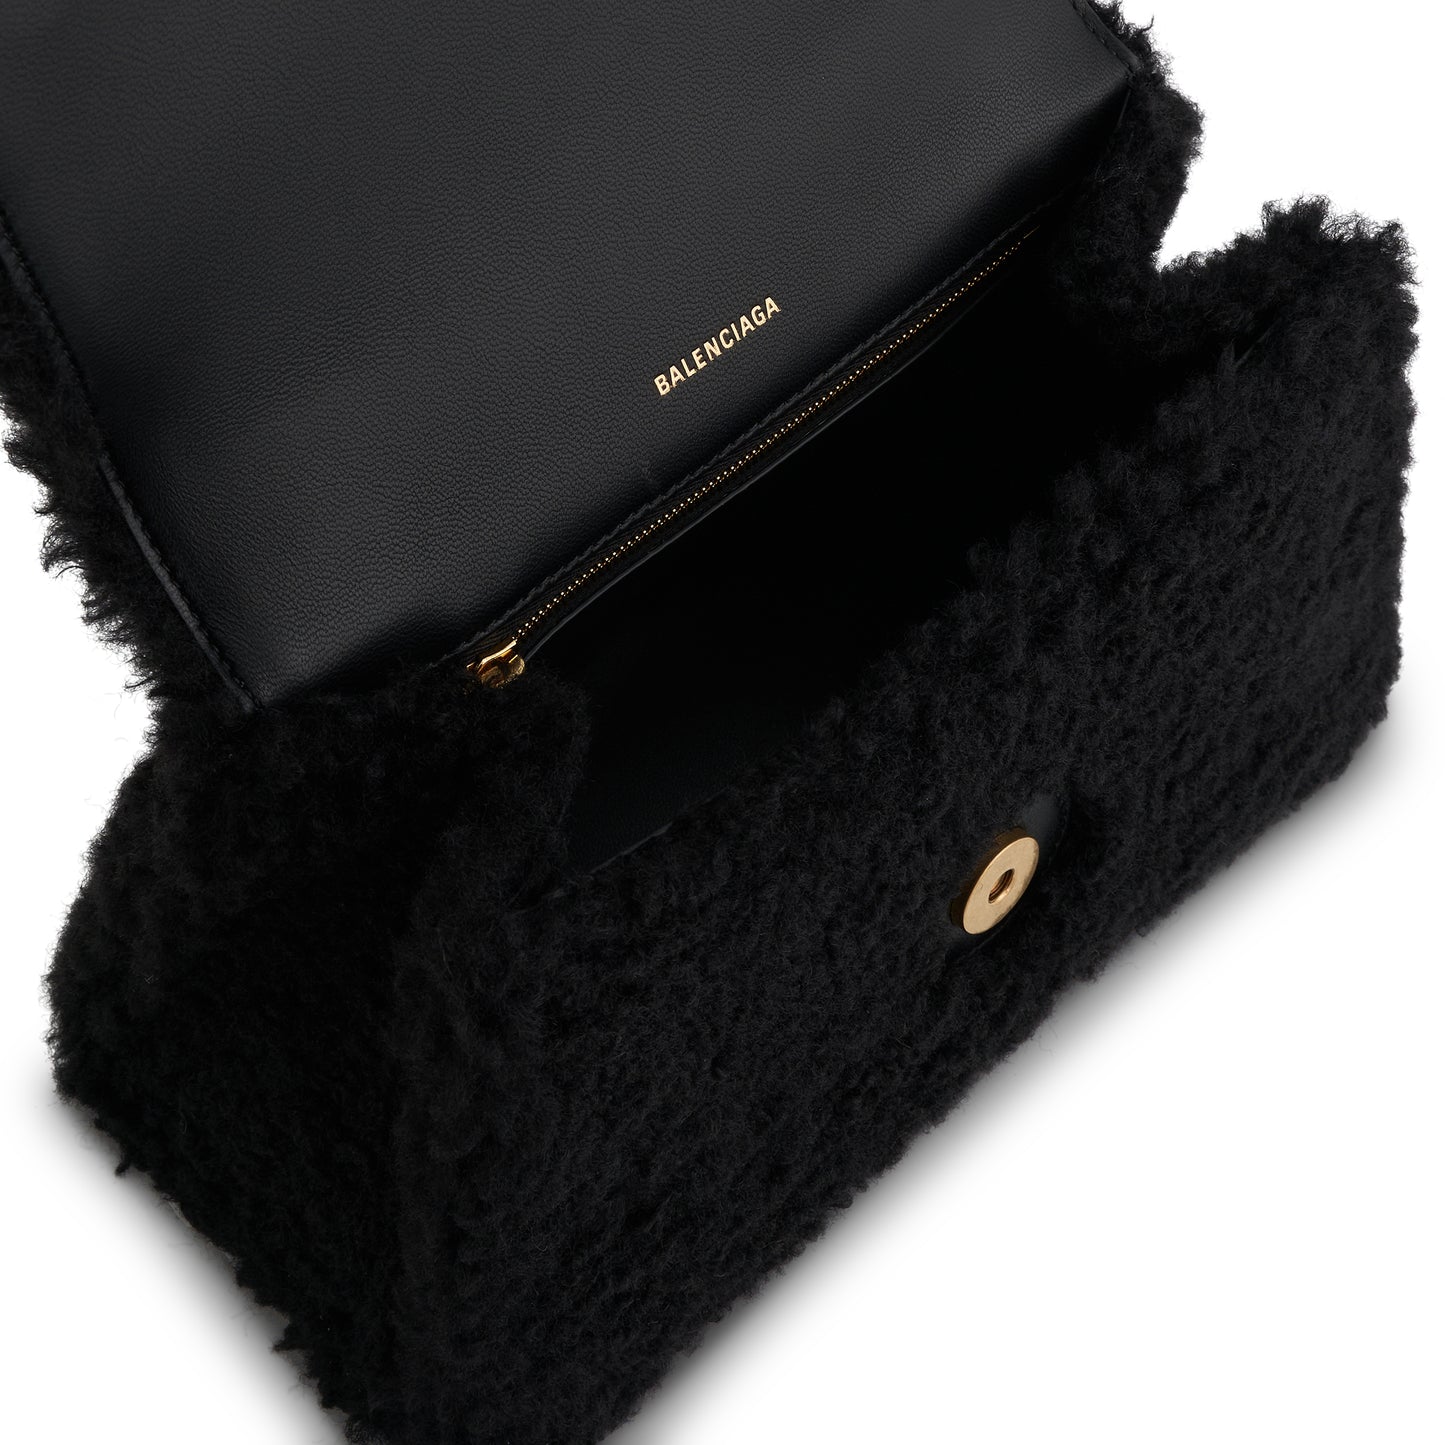 Furry Hourglass Small Handbag in Black